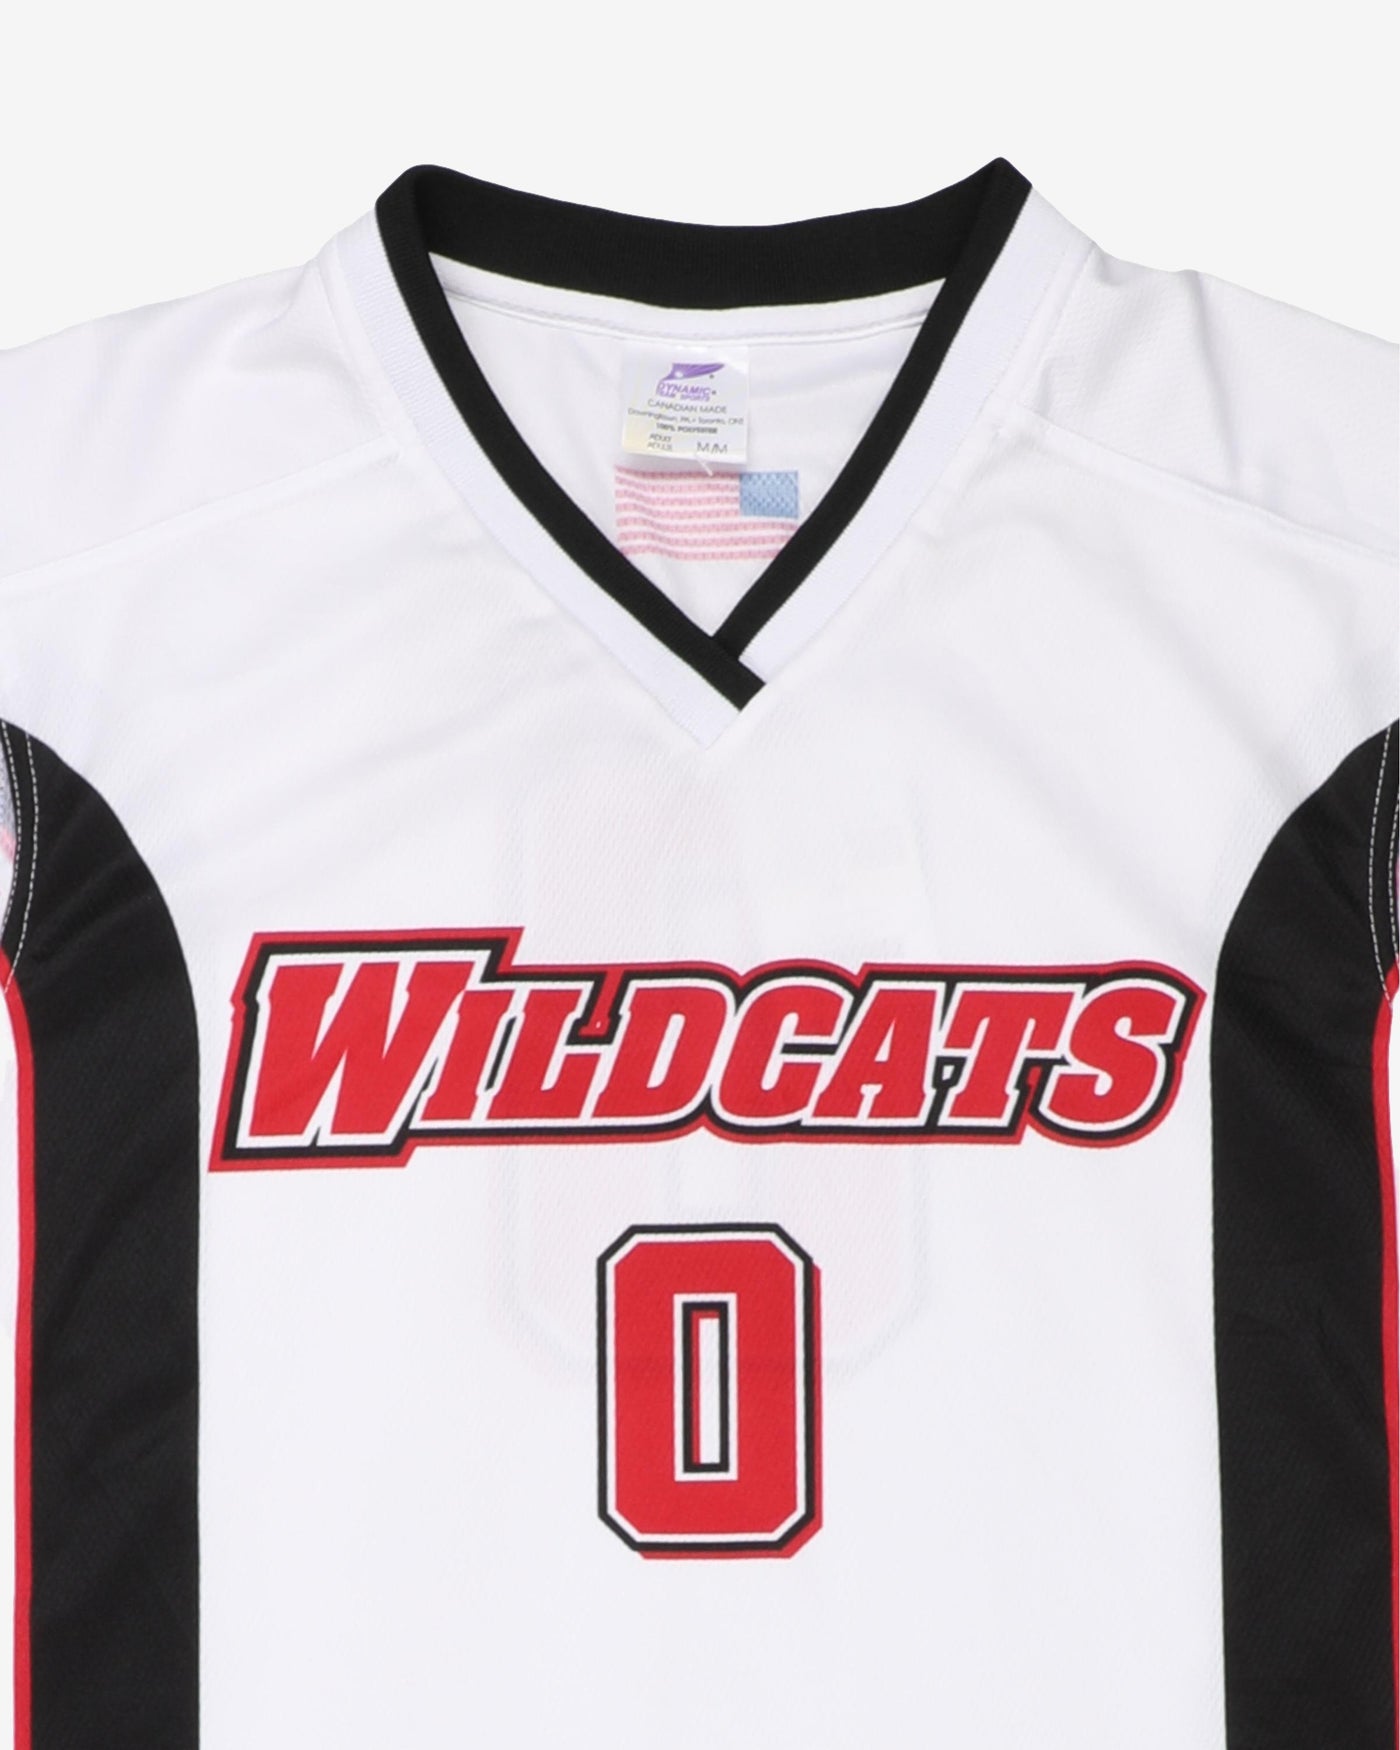 Arizona Wildcats NCAA Basketball Jersey - M